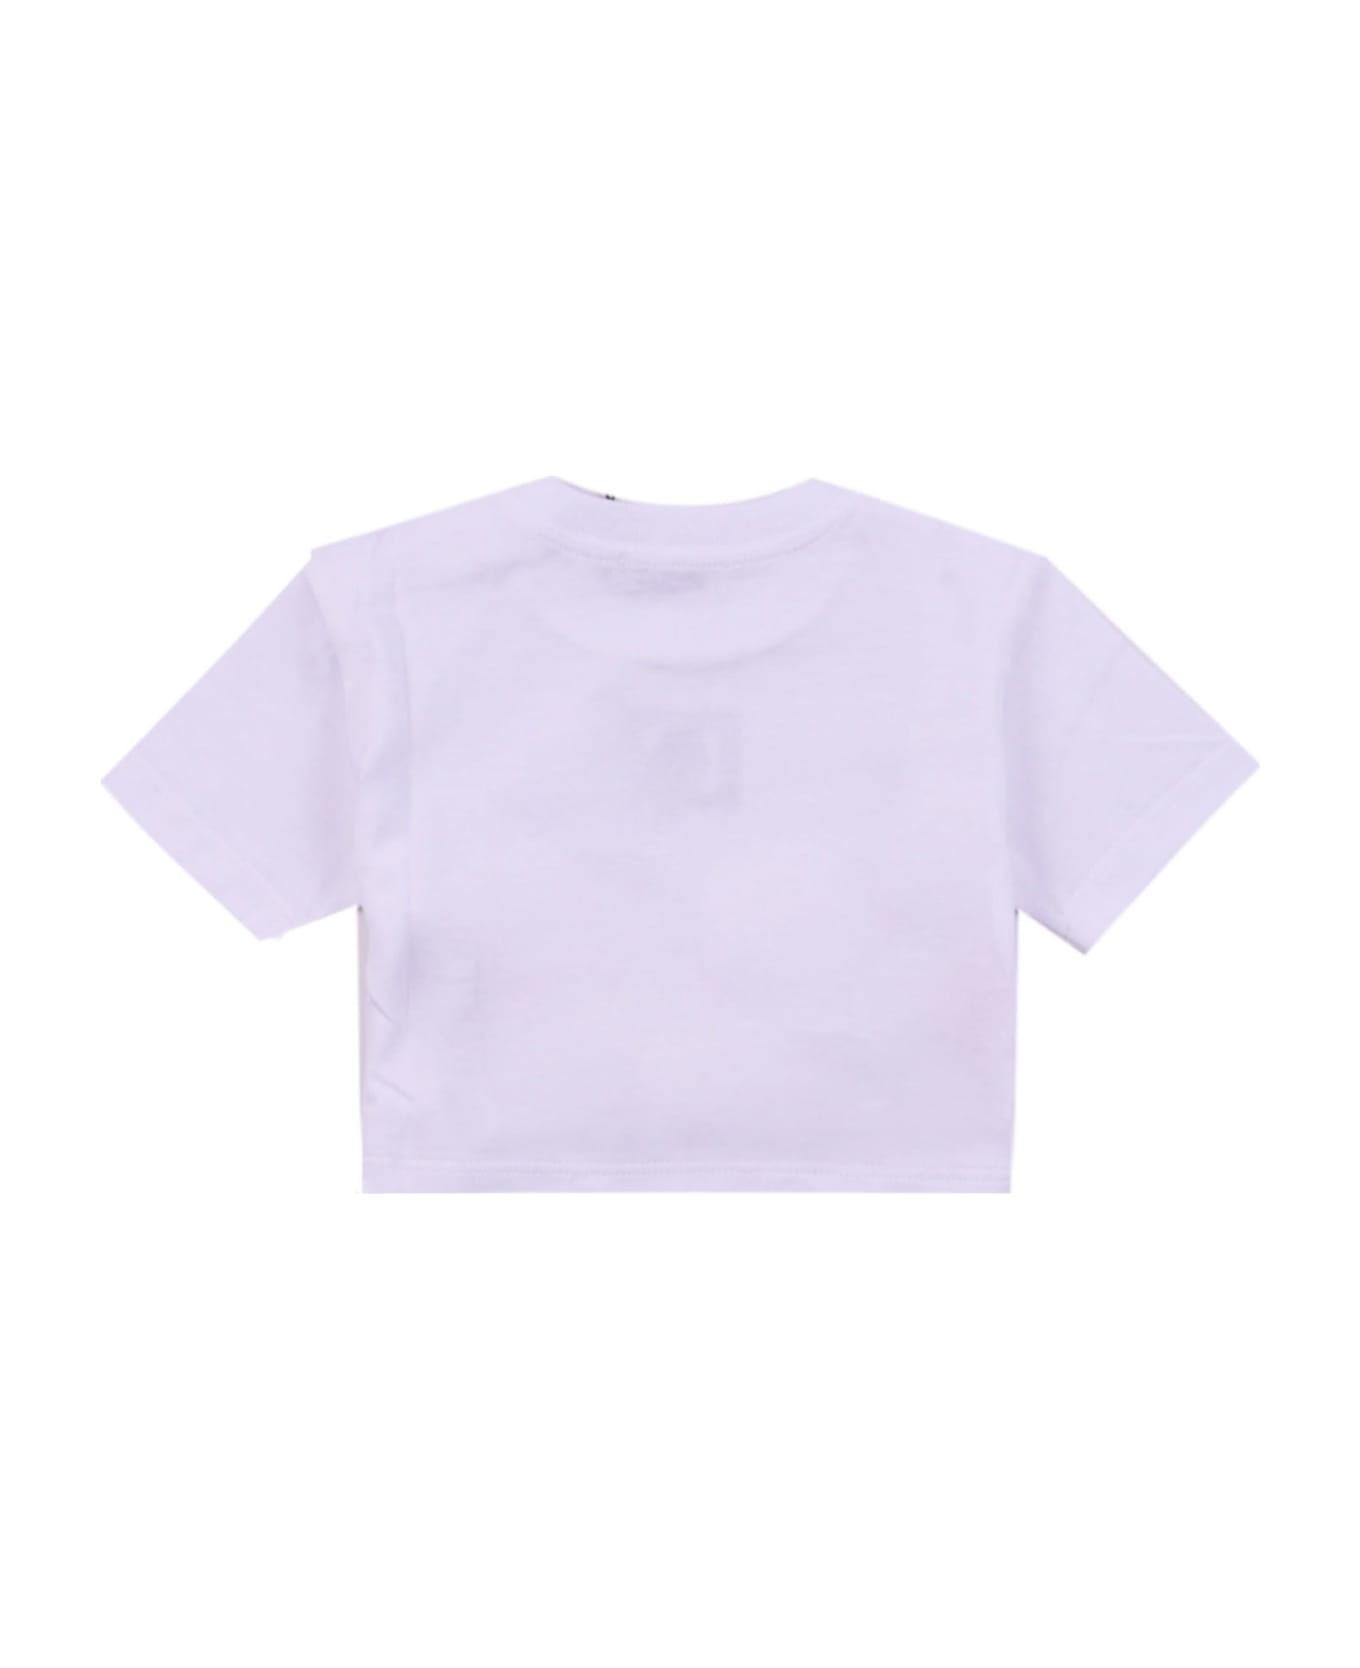 Dolce & Gabbana Jersey T-shirt With Poppy Print - White